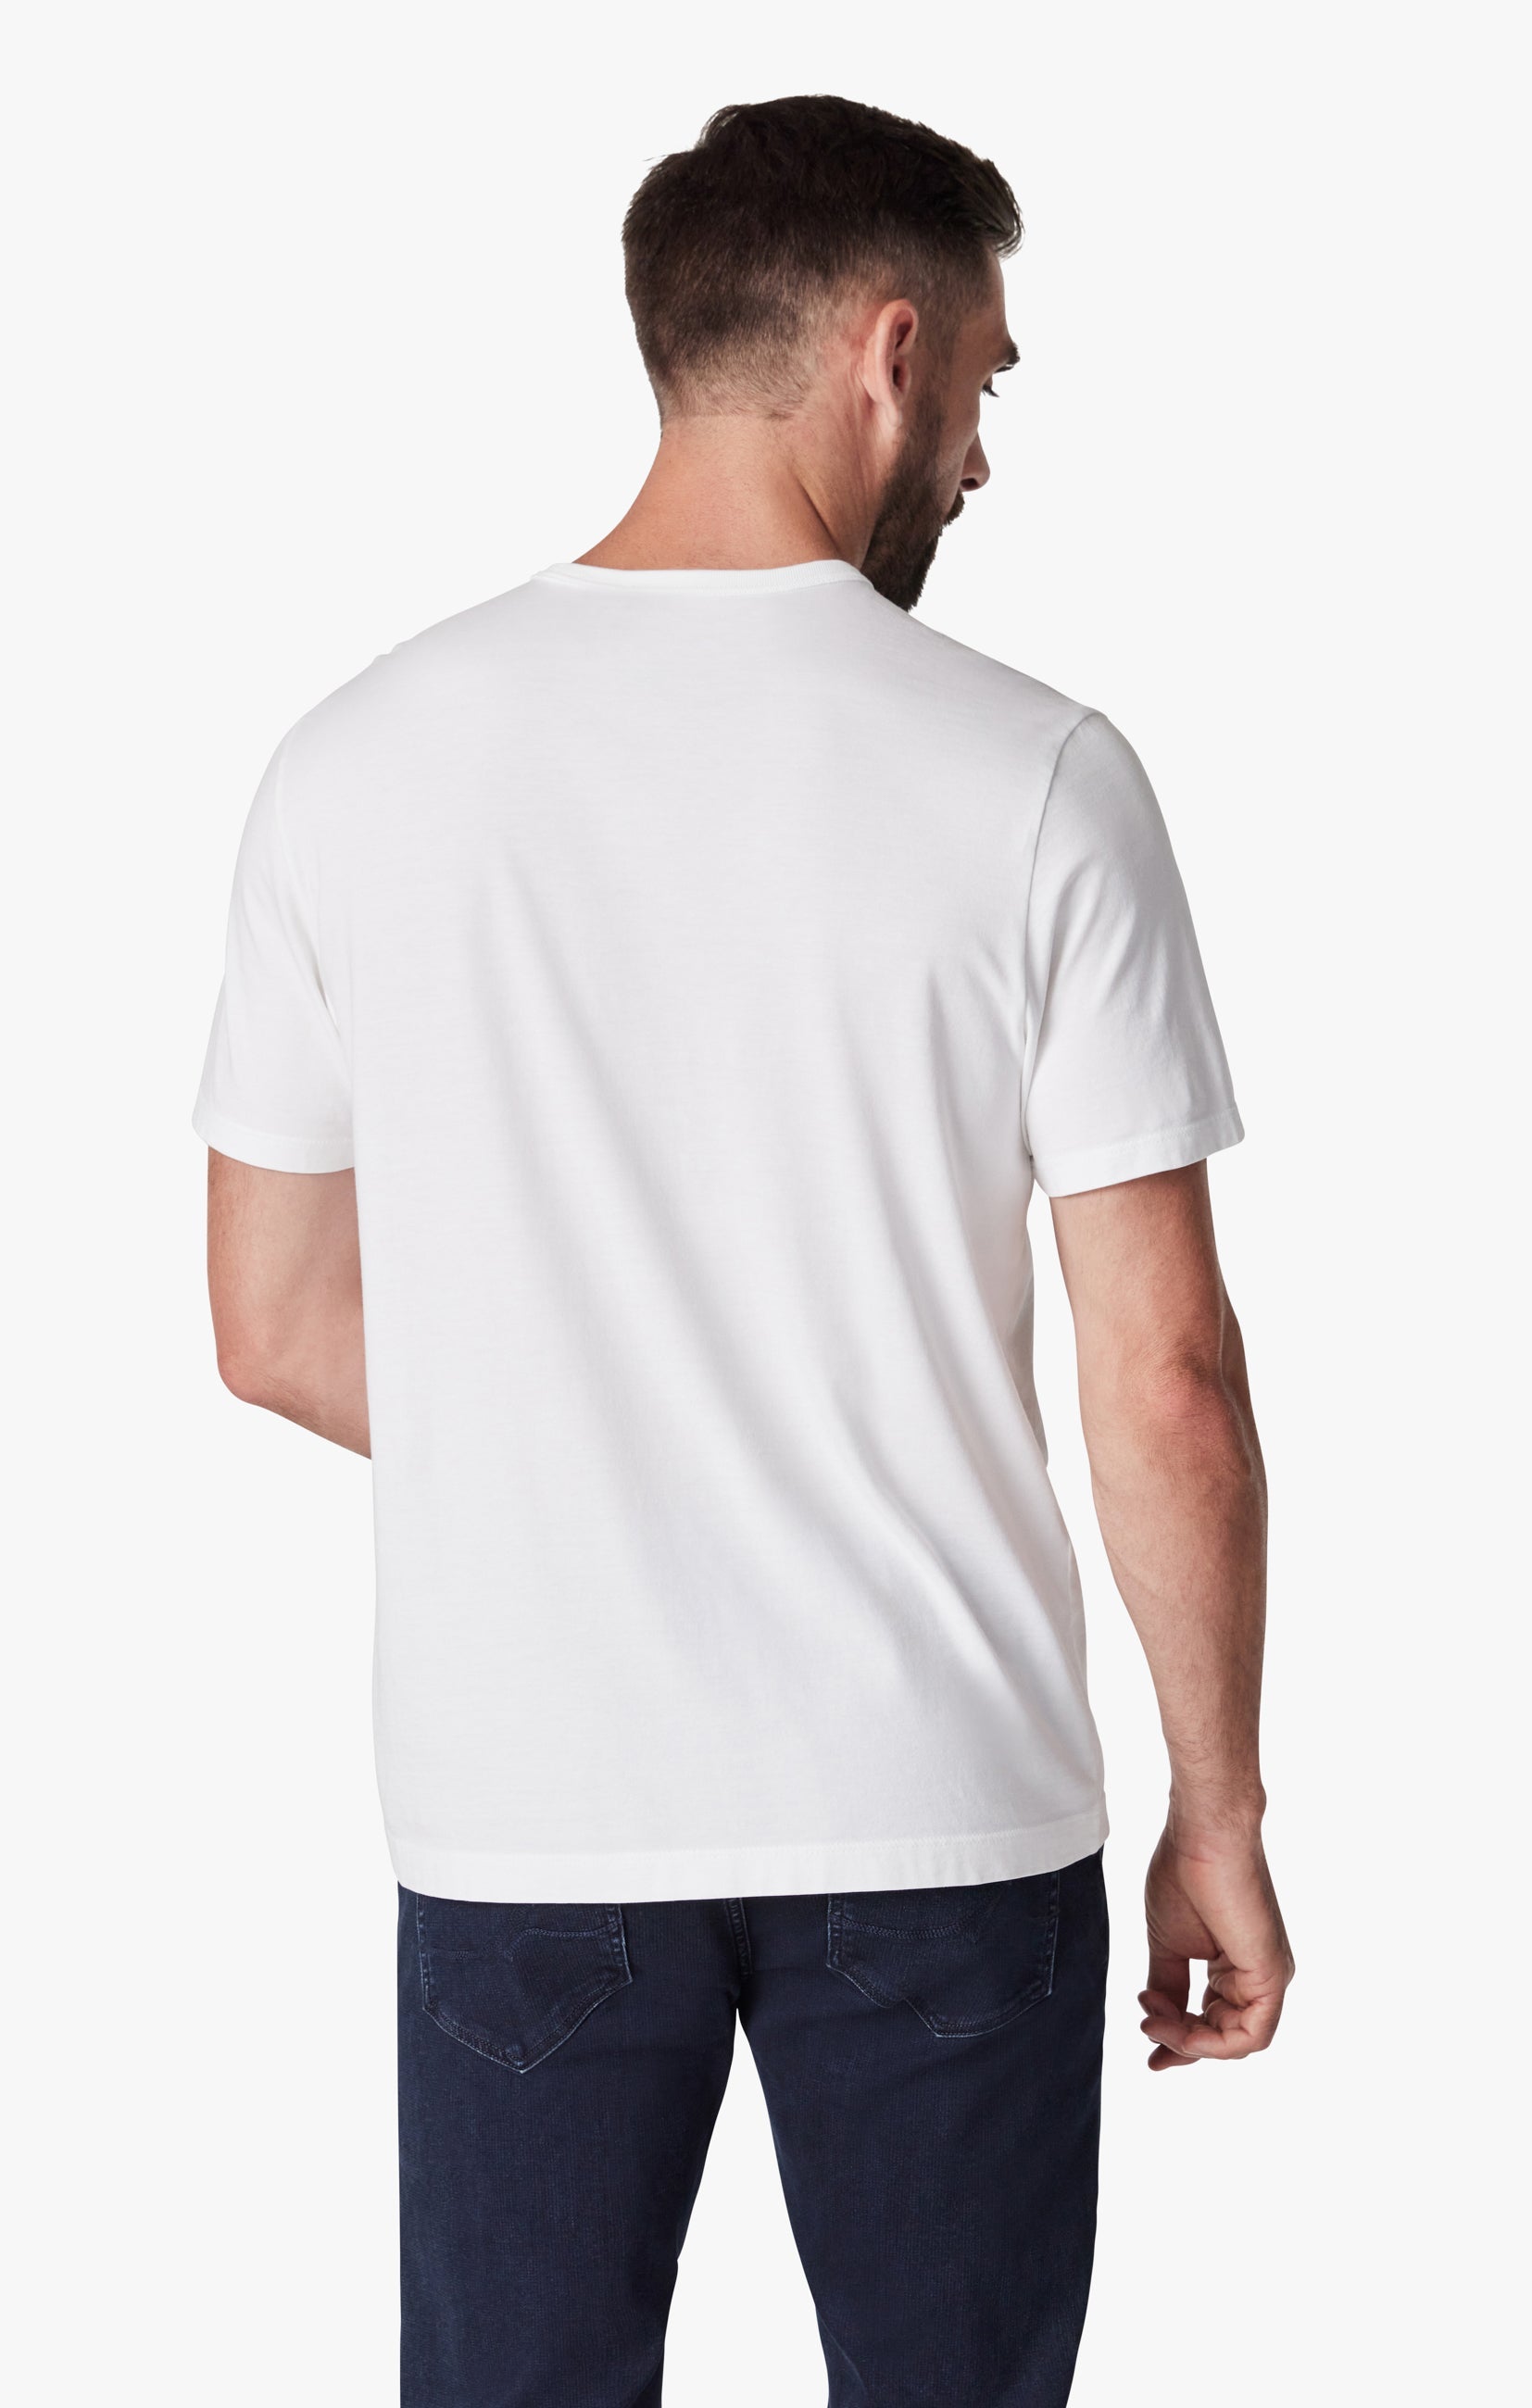 Basic Crew Neck T-Shirt in White Image 2